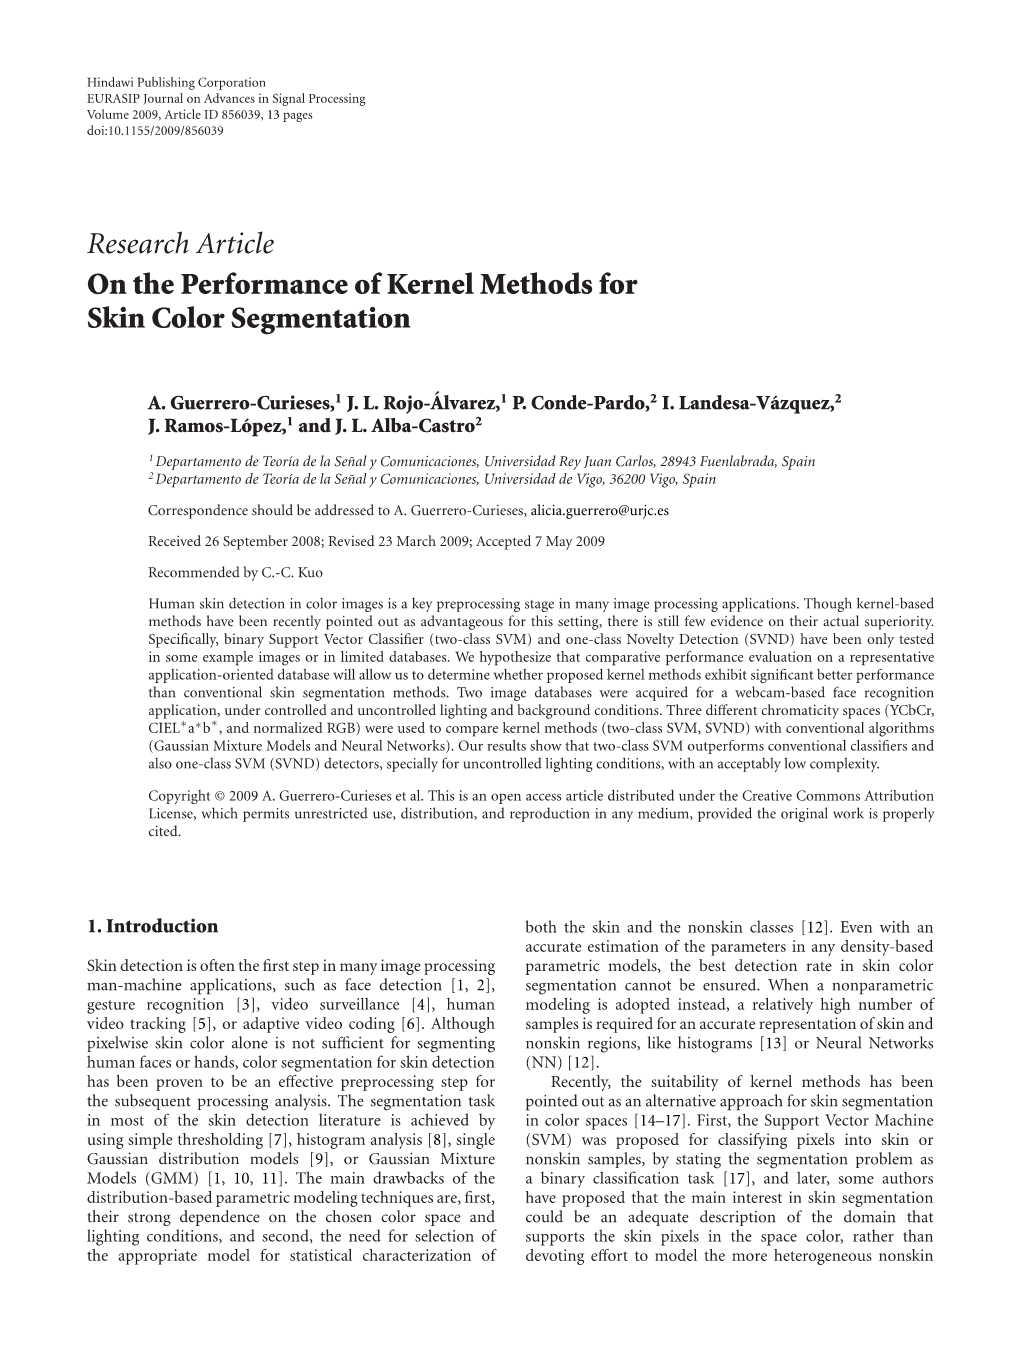 On the Performance of Kernel Methods for Skin Color Segmentation